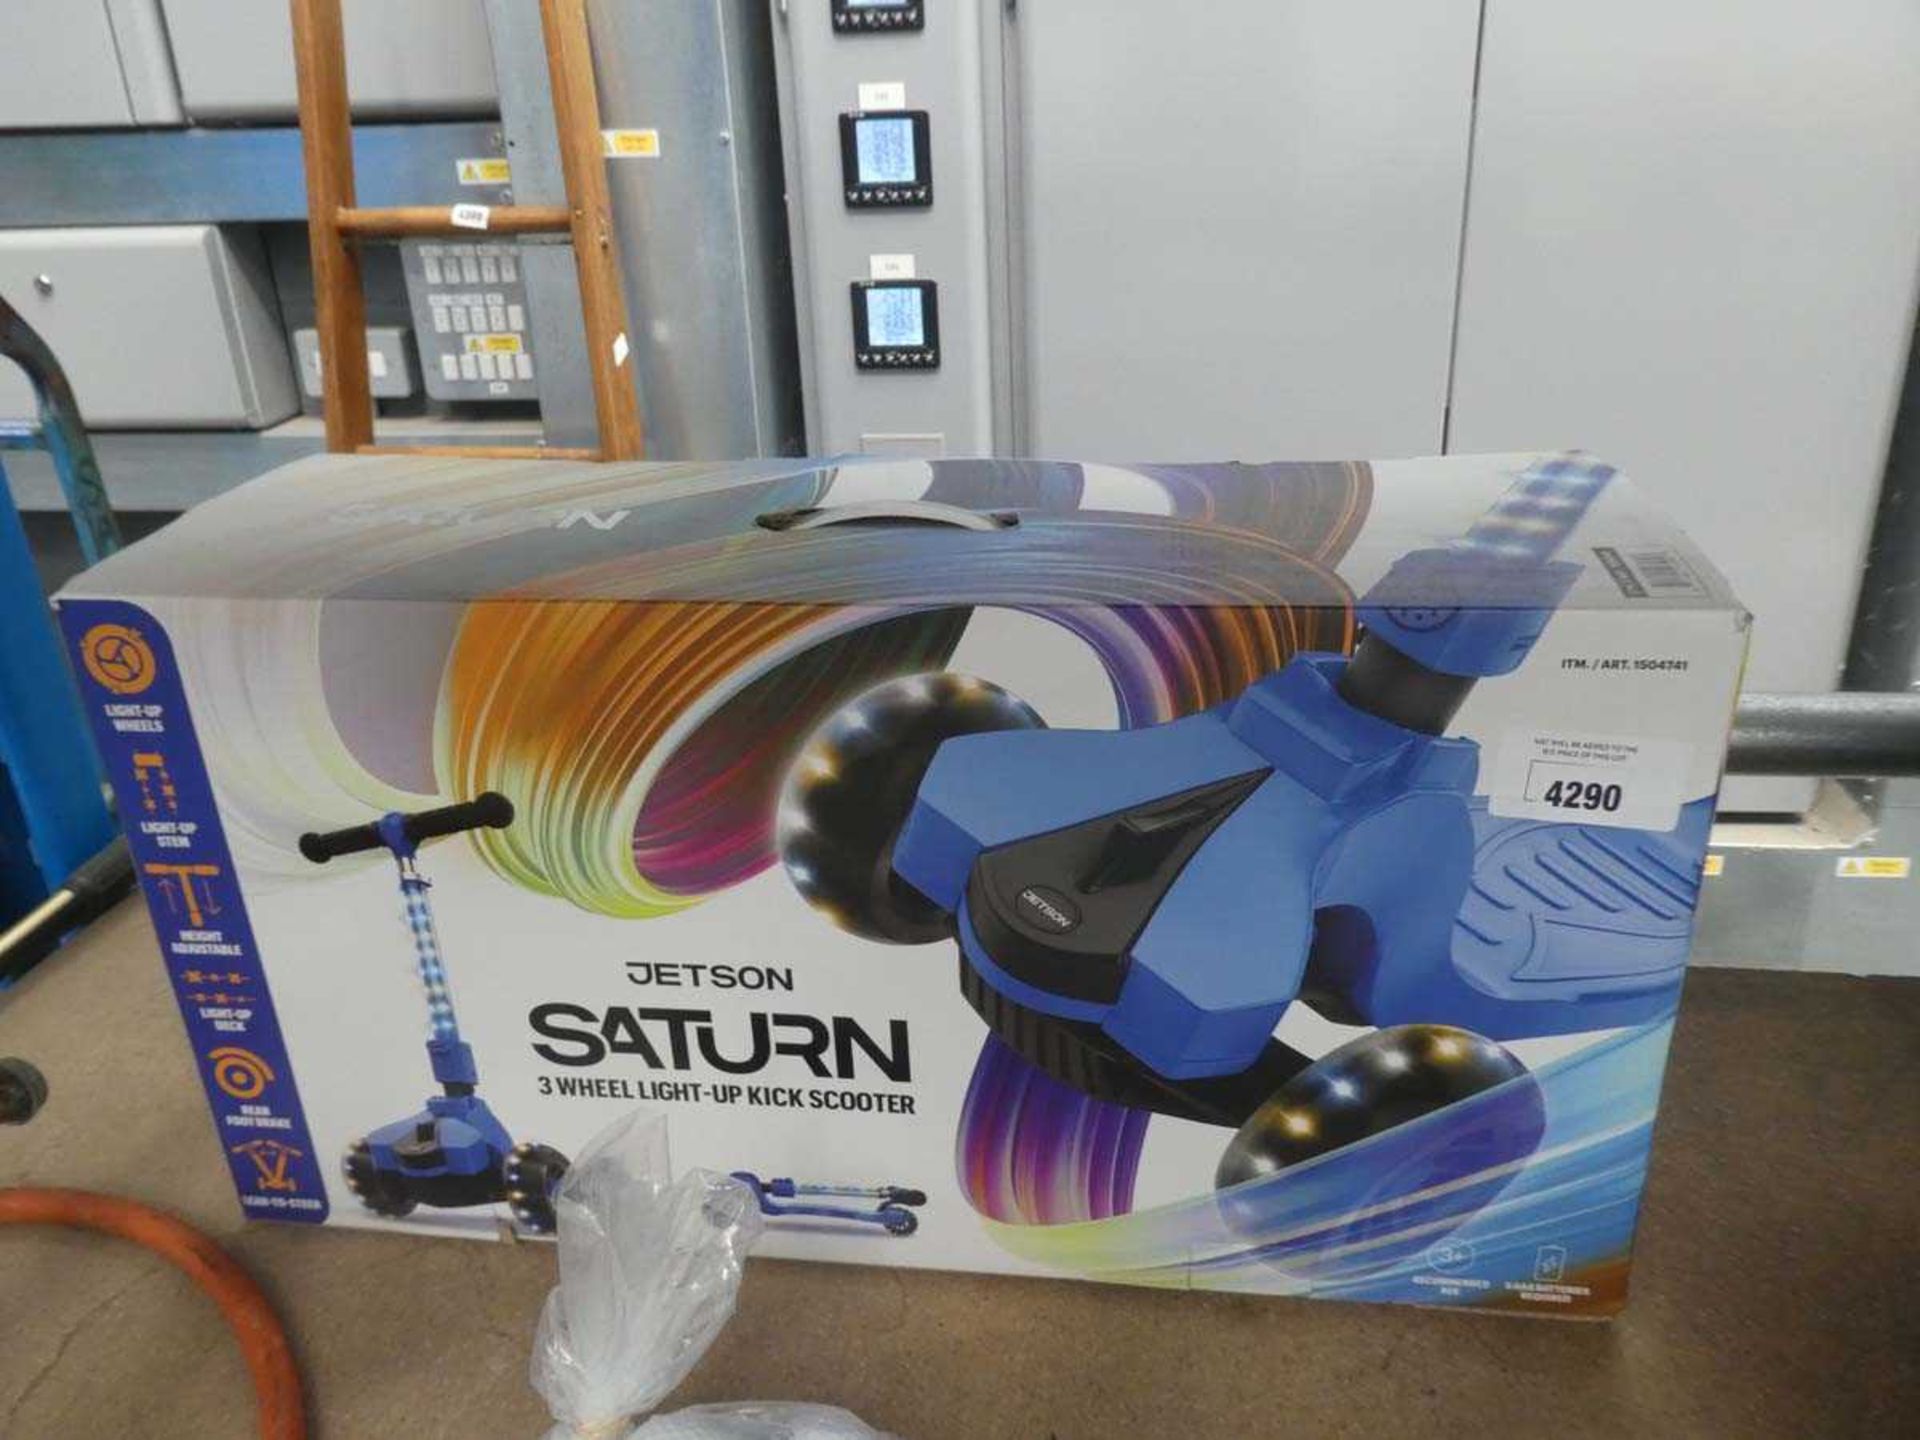 +VAT Boxed Jetson Saturn 3-wheeled light-up kick scooter